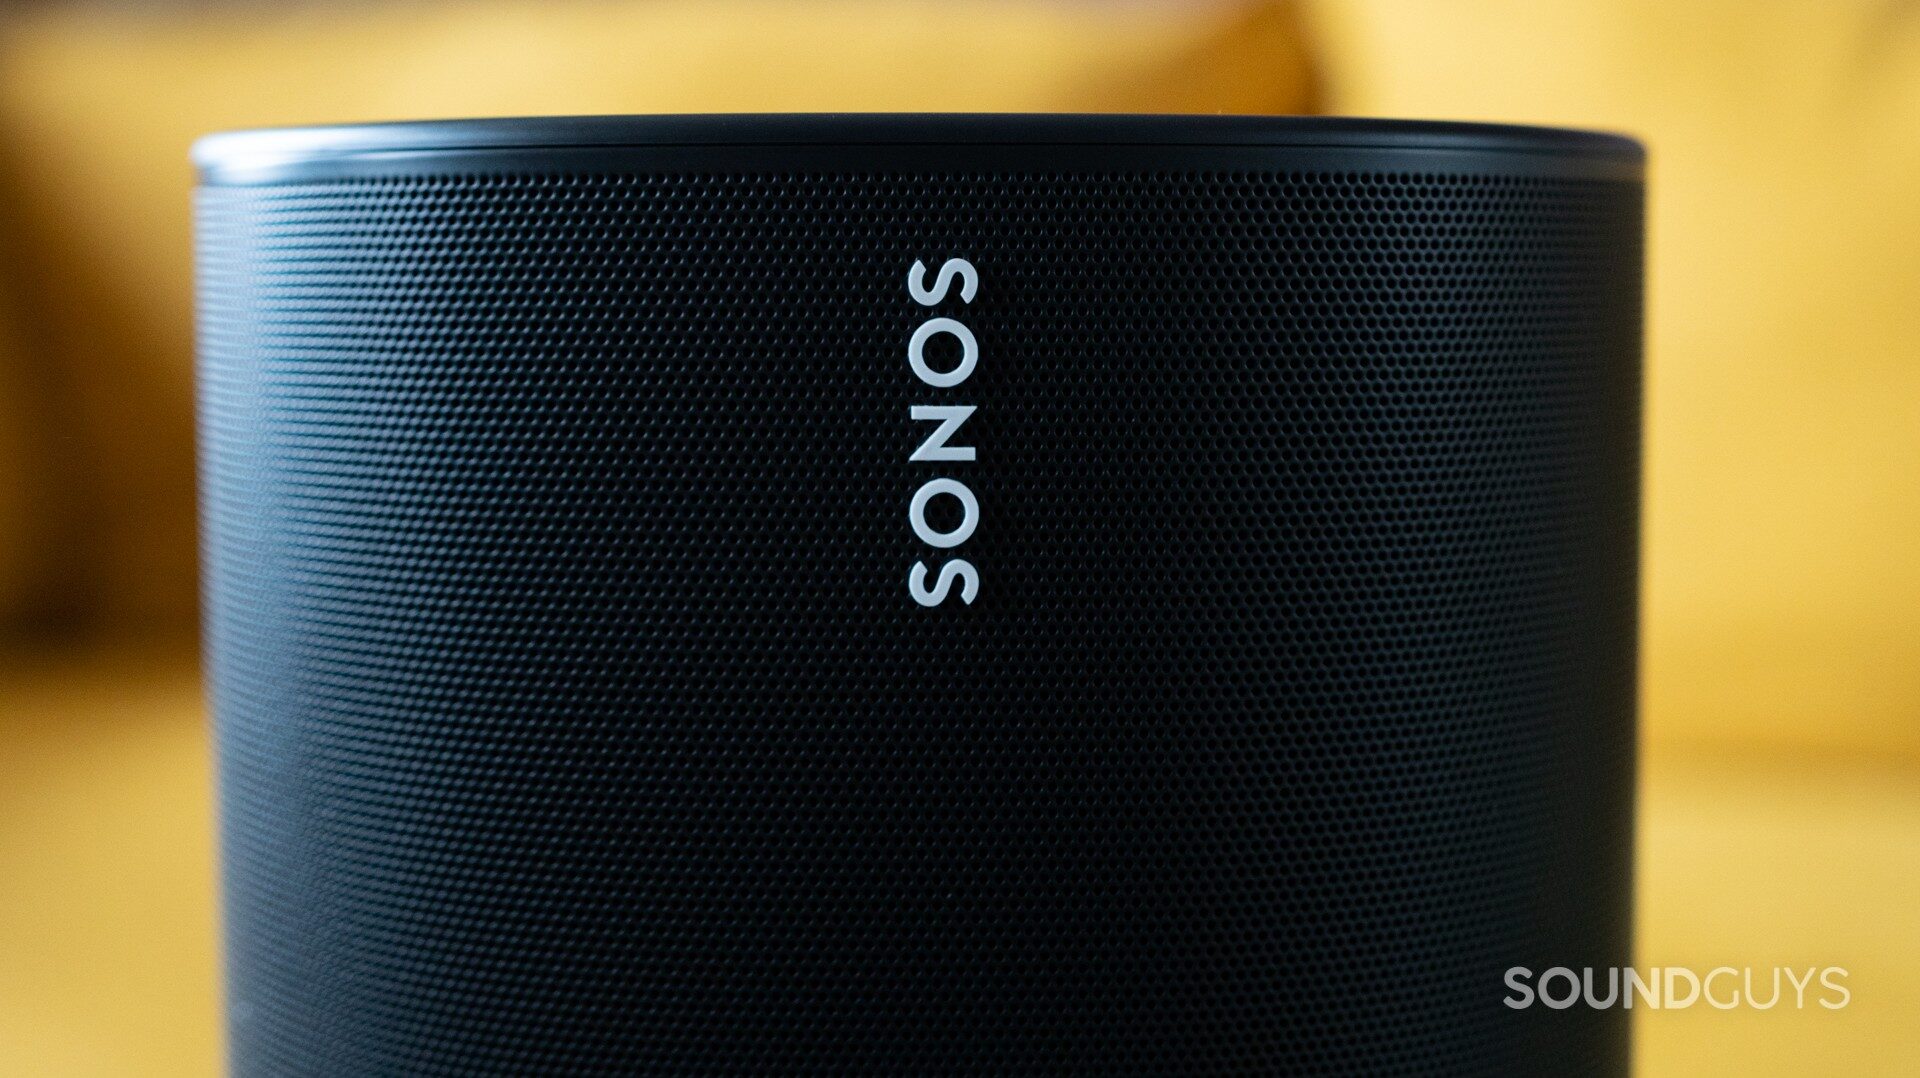 Close-up of the white Sonos logo on the black speaker